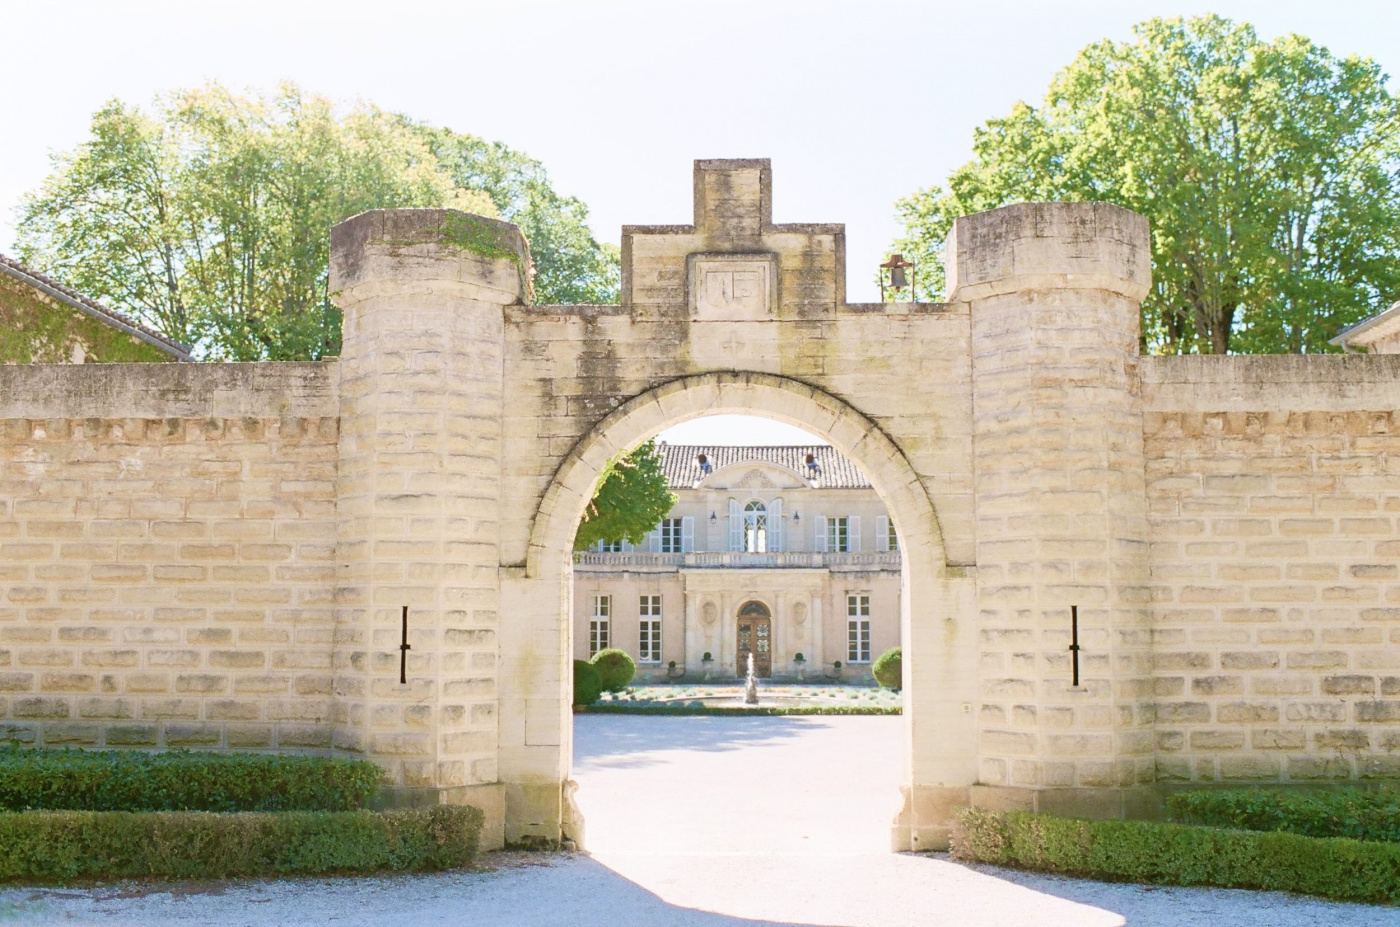 Entrance of luxury wedding chateau in France